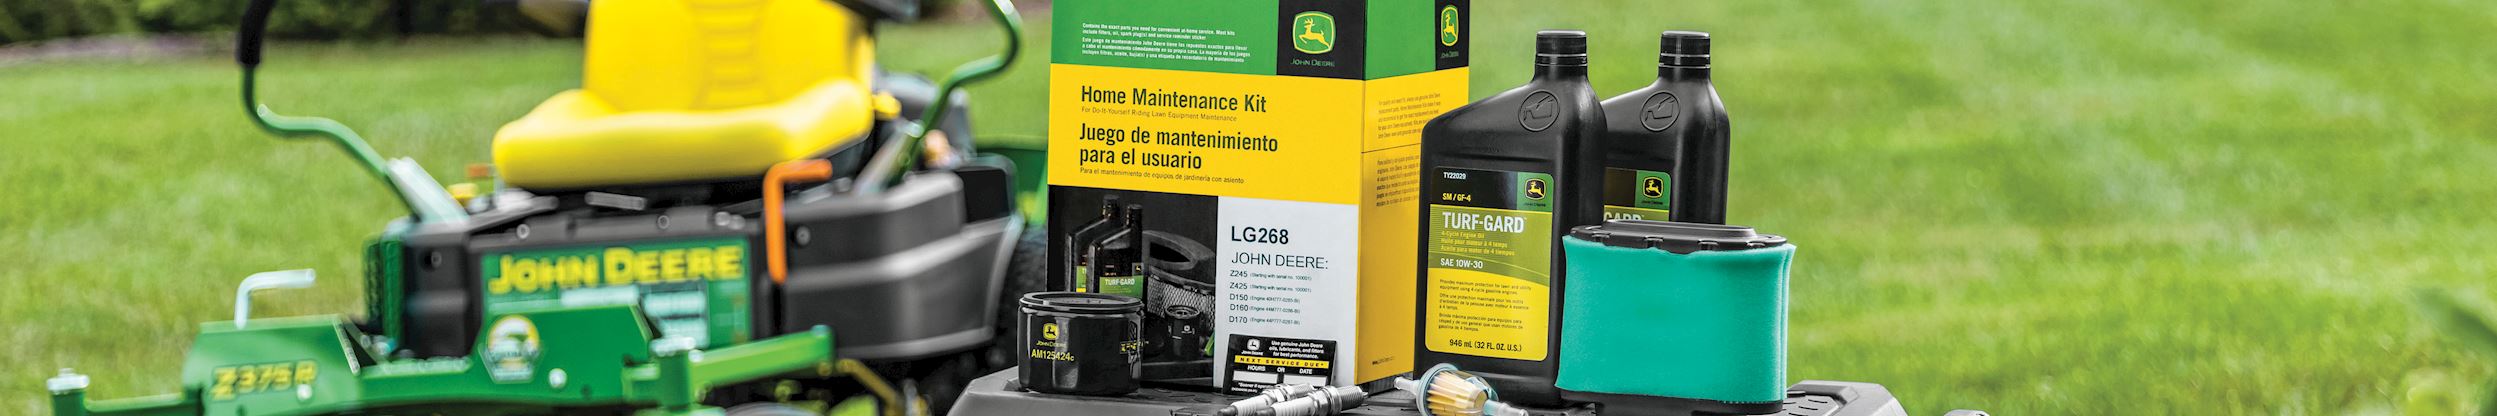 John Deere Home Maintenance Kit